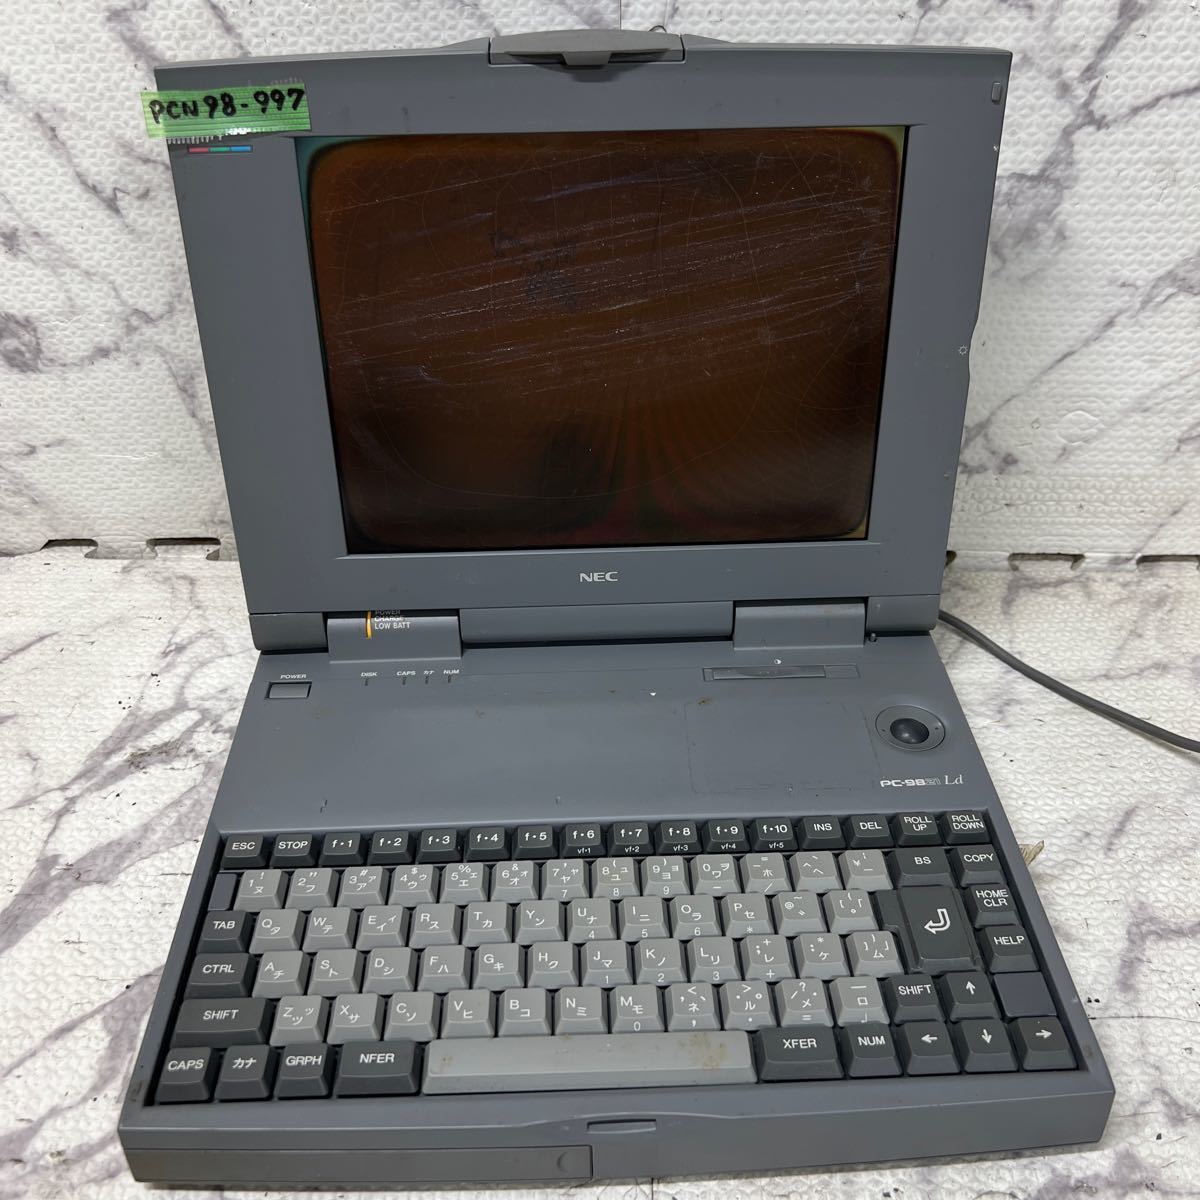 PCN98-997 супер-скидка PC98 ноутбук NEC PC-9821Ld/260 пуск подтверждено Junk 